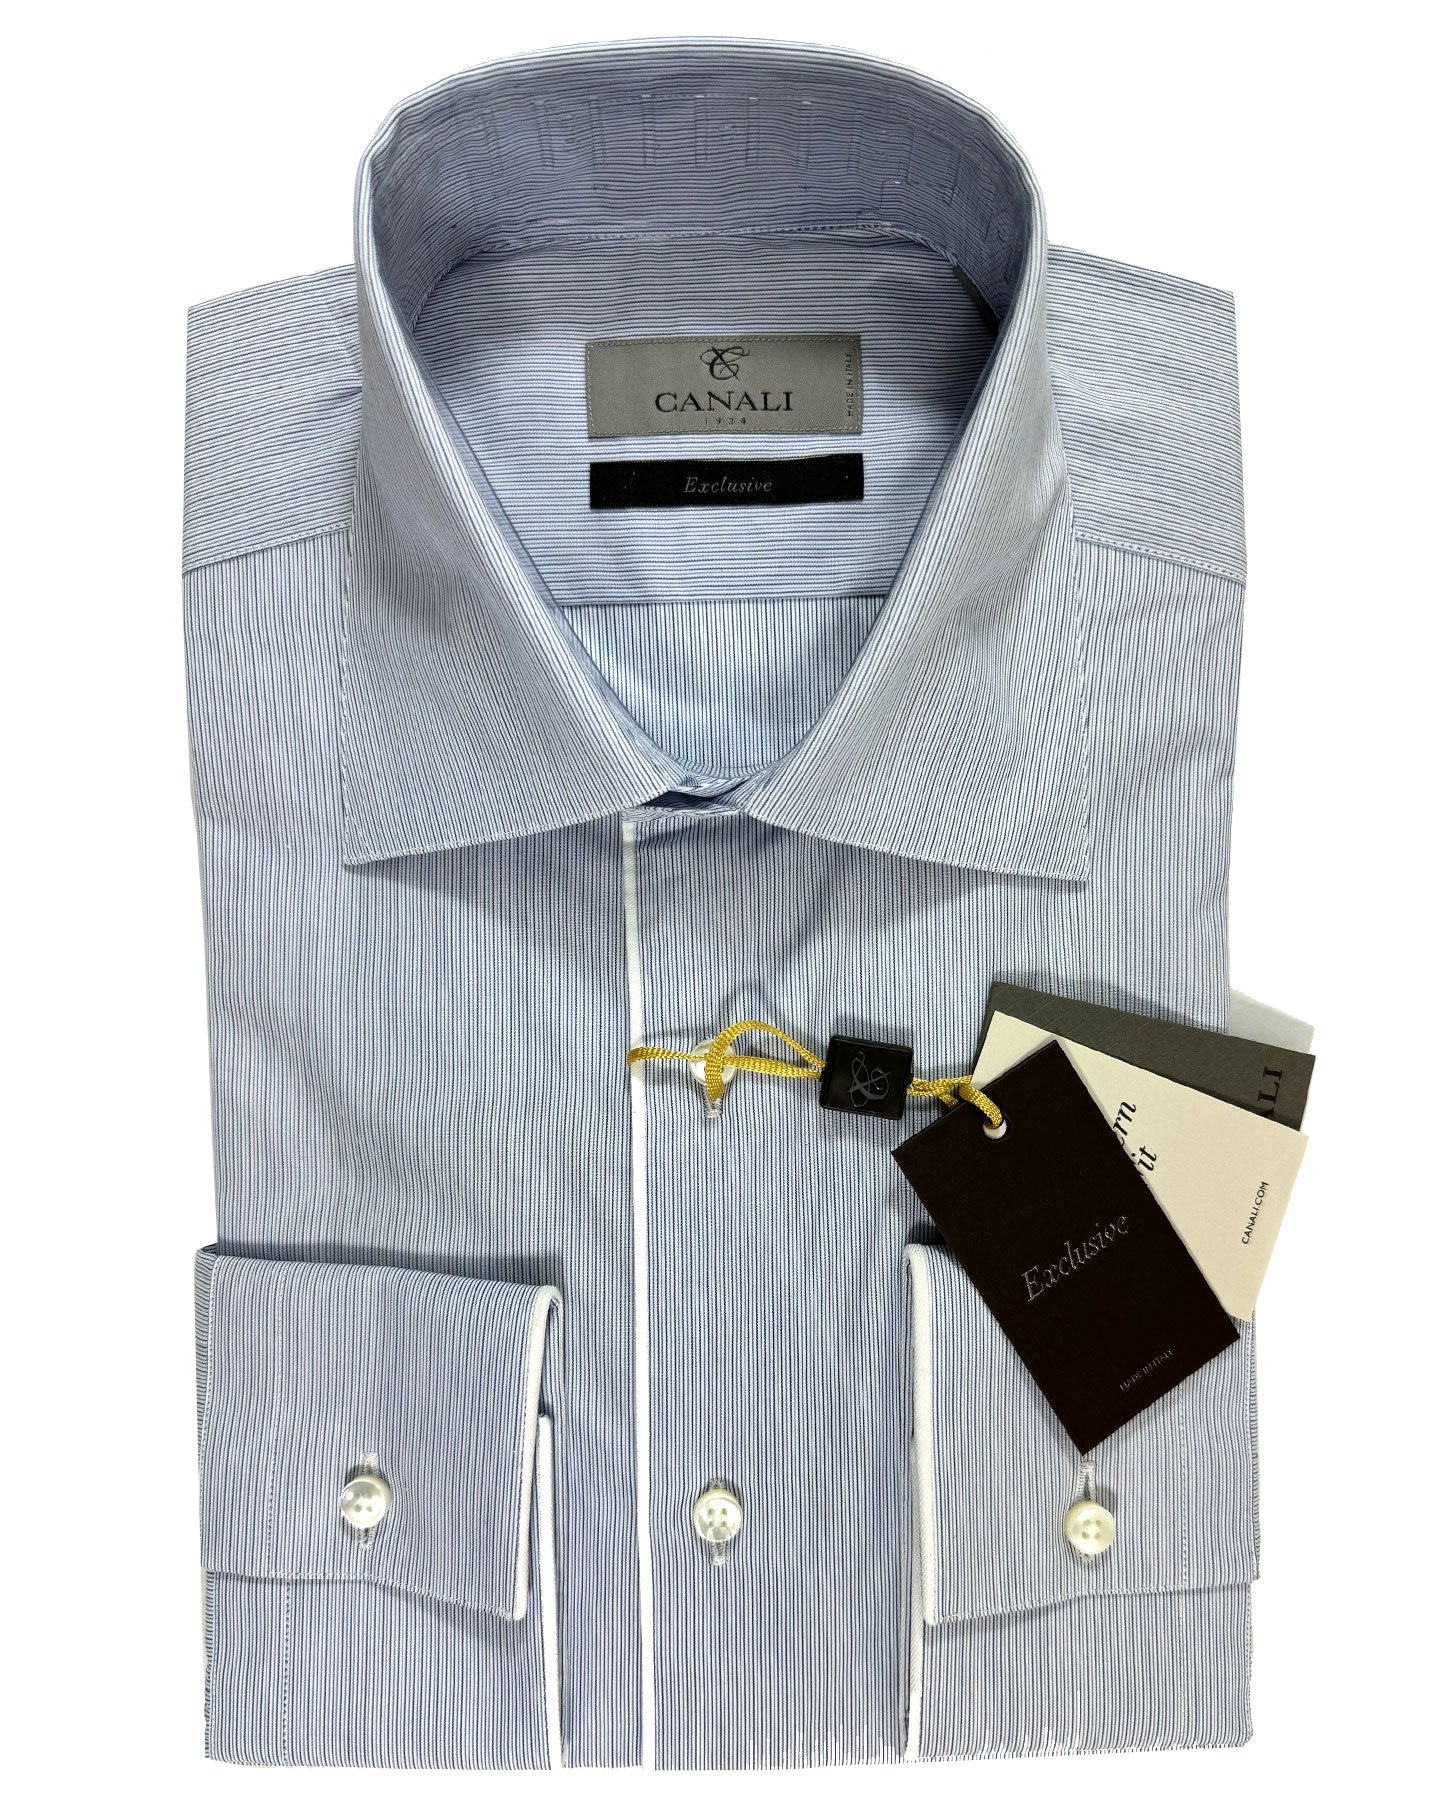 Canali Dress Shirt Exclusive White Navy Blue Stripes 